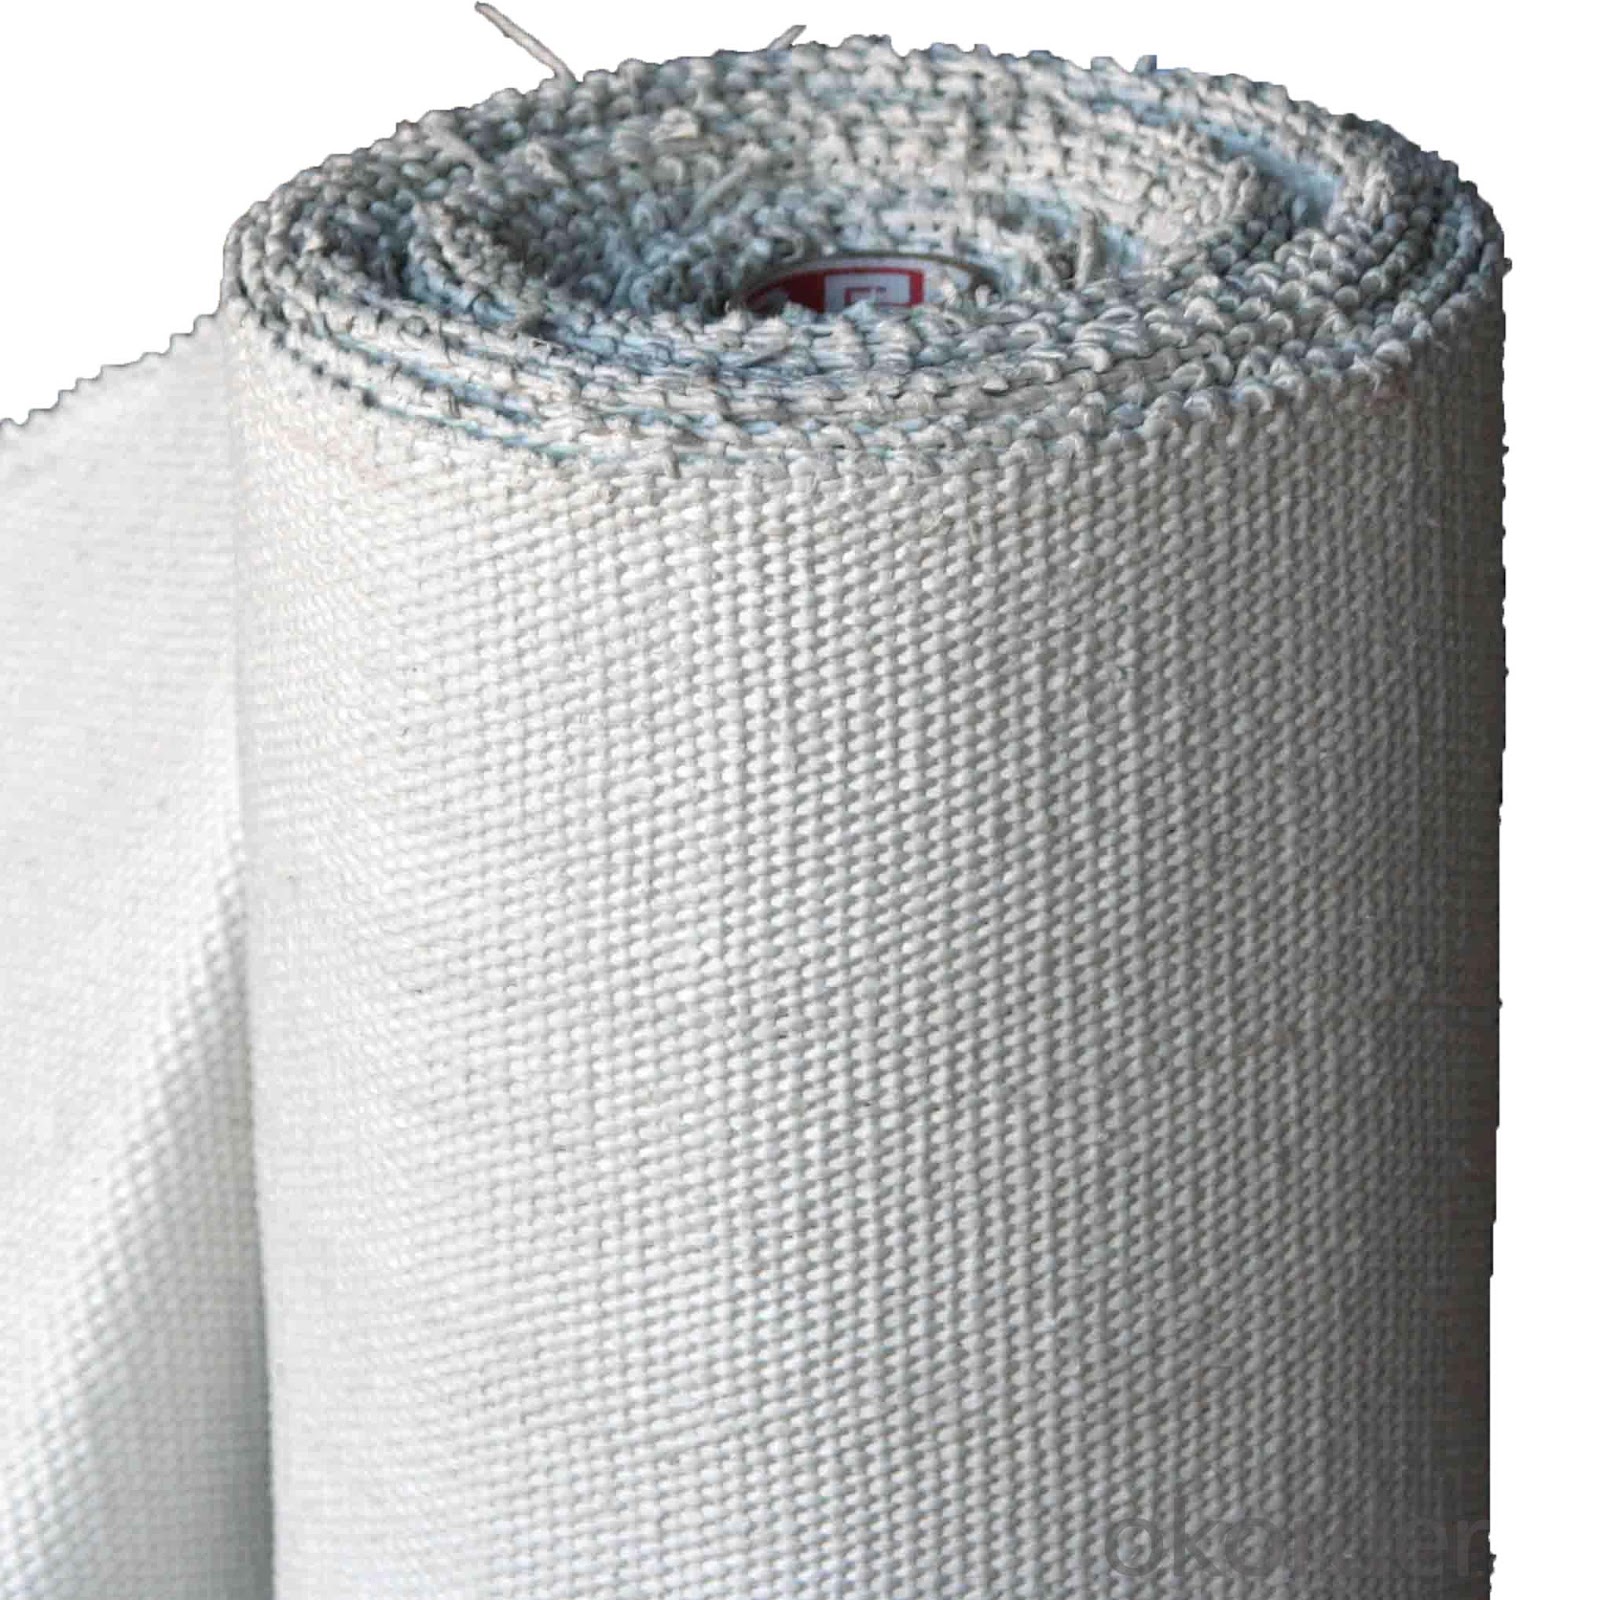  Asbestos Cloth - Asbastos Fabric